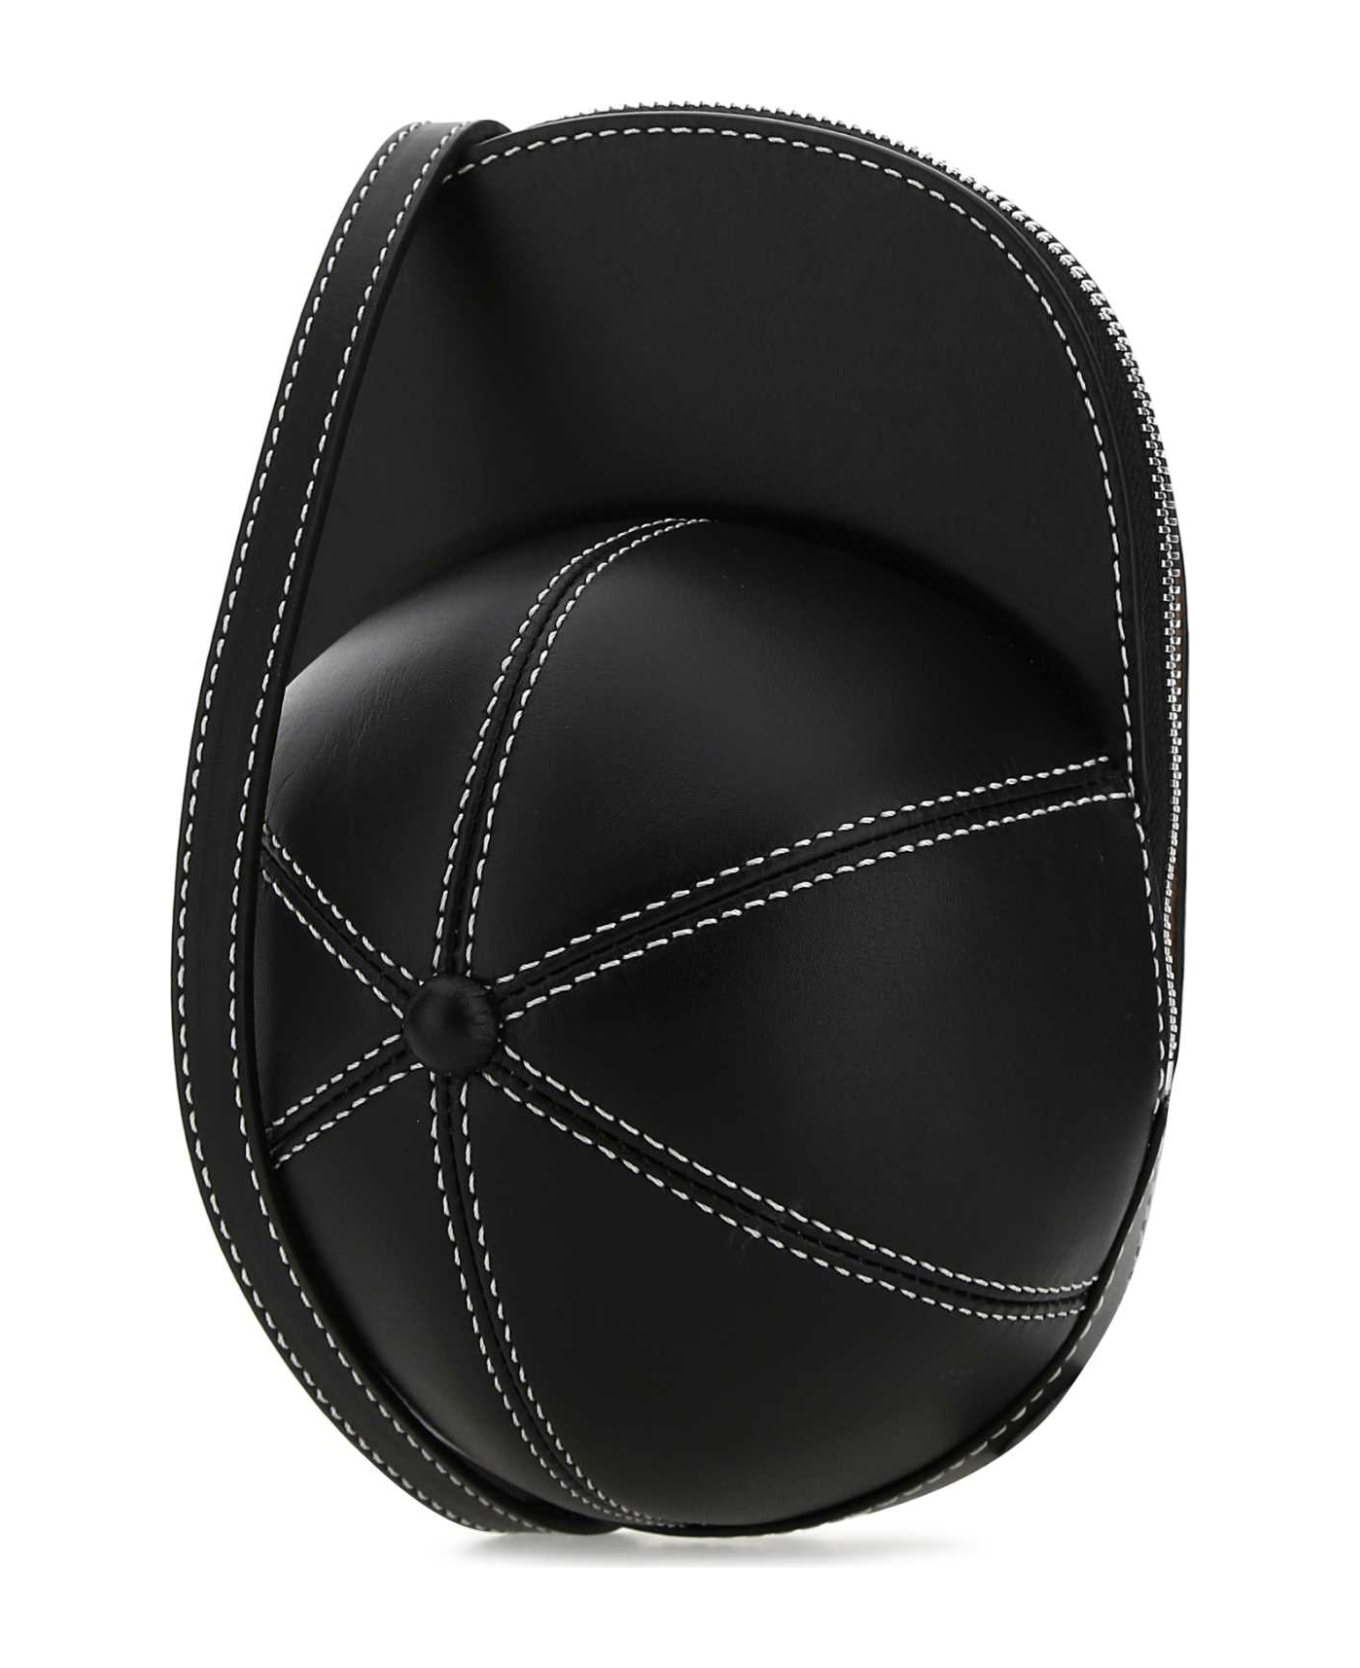 J.W. Anderson Black Leather Medium Cap Crossbody Bag - 999 ショルダーバッグ